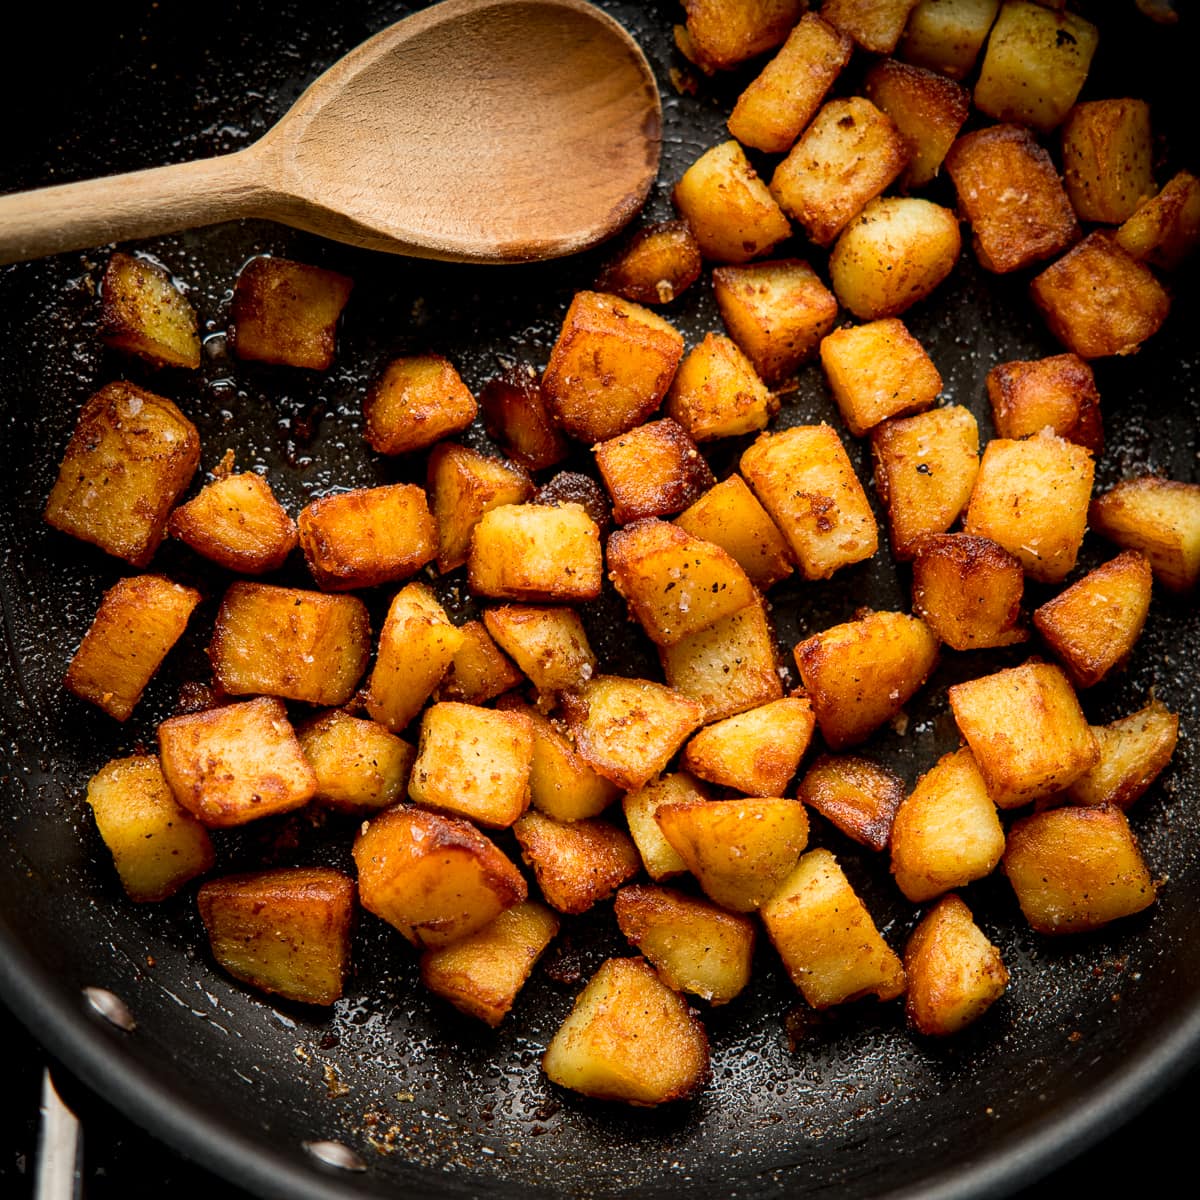 https://www.kitchensanctuary.com/wp-content/uploads/2020/08/Sauteed-Potatoes-square-FS-31.jpg